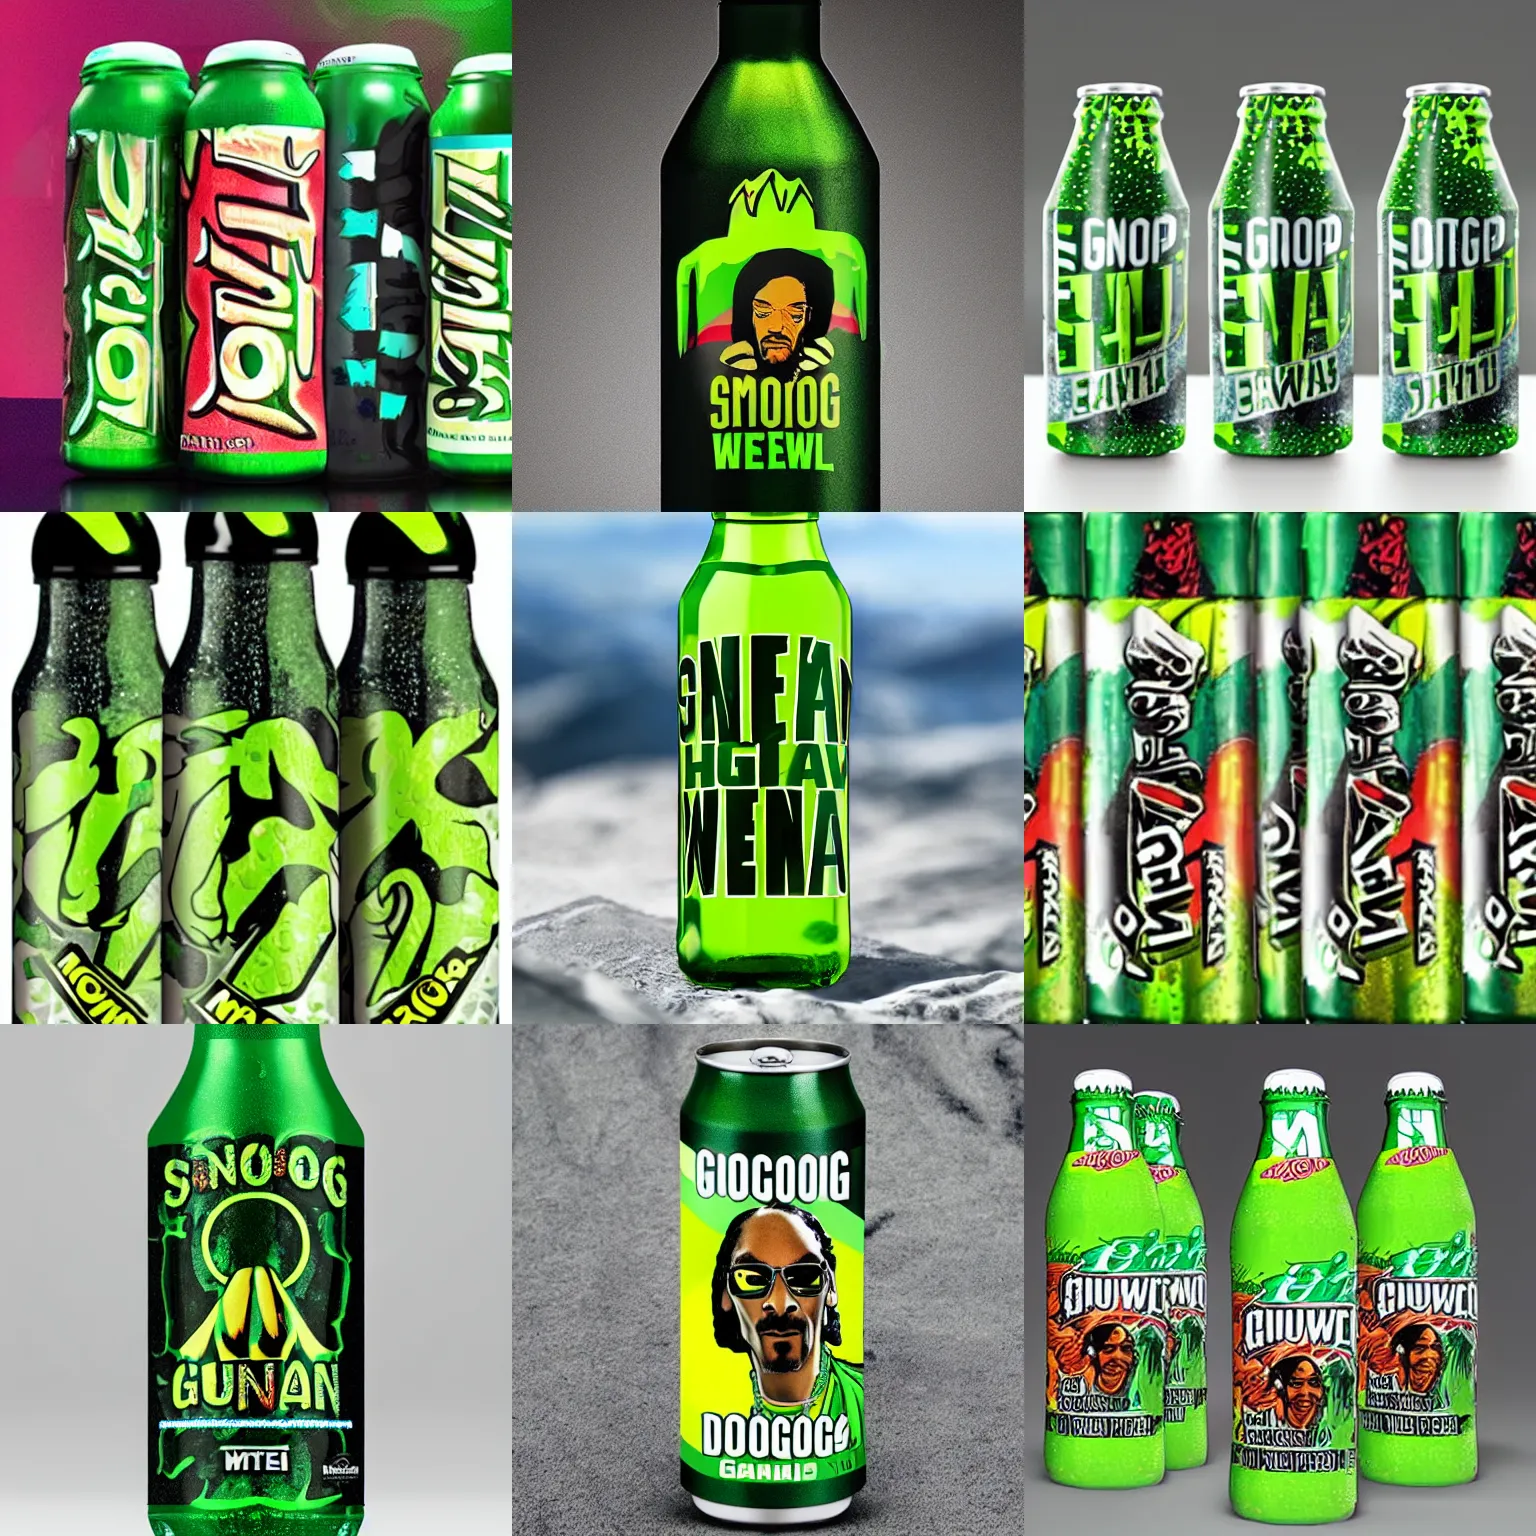 Prompt: Snoop Dogg Ganja themed MTN Dew bottle